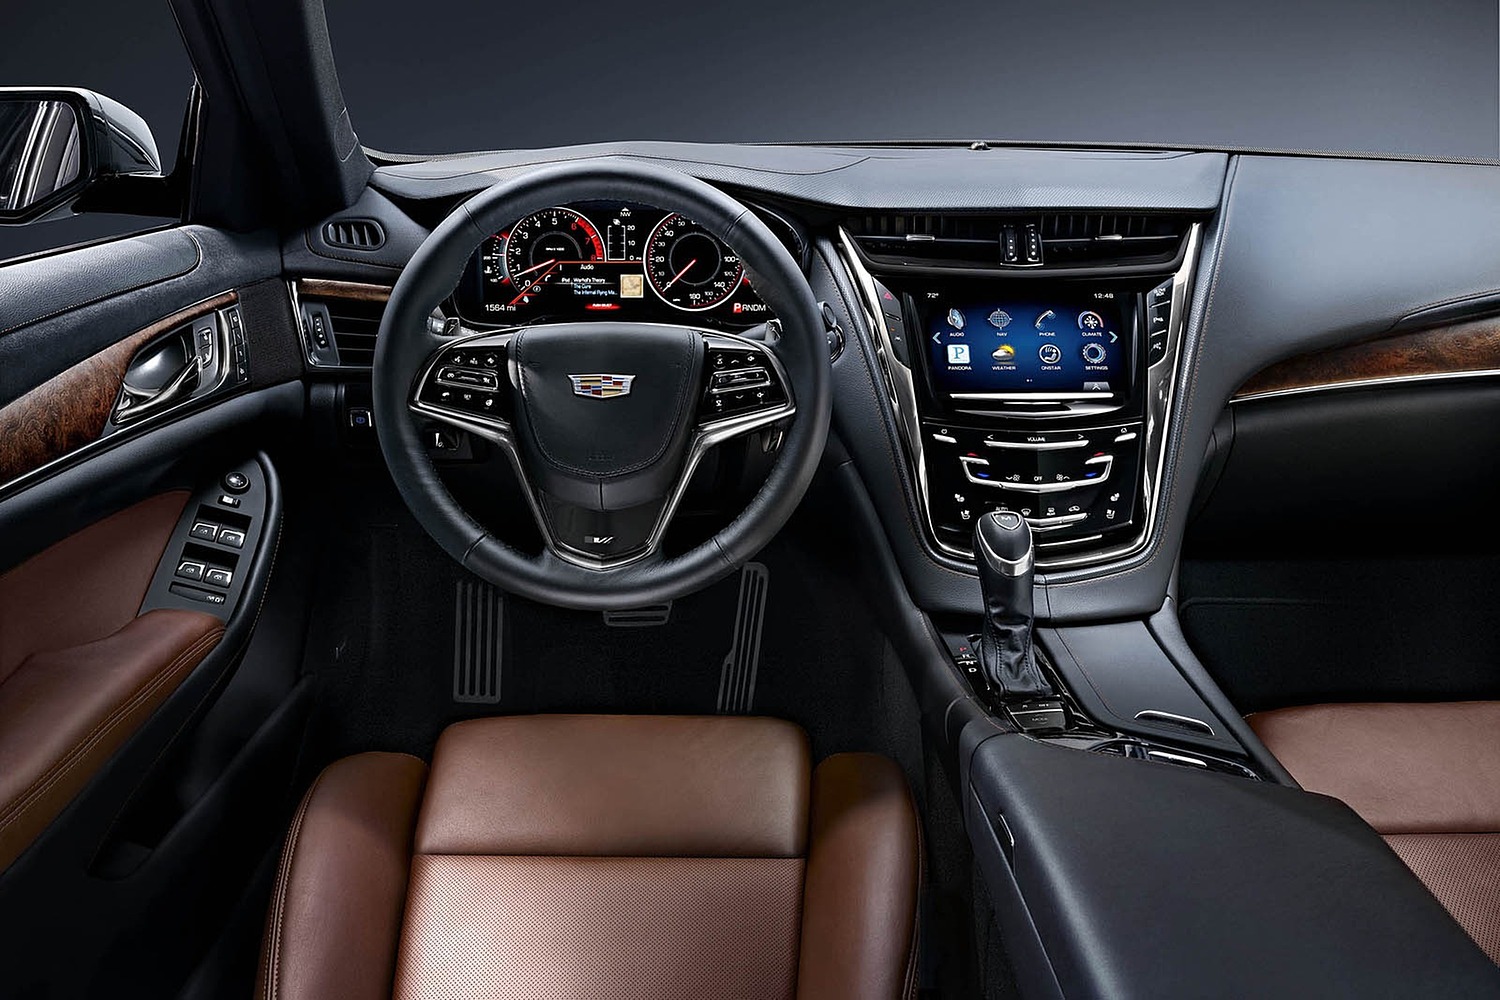 2018 Cadillac CTS V-Sport Premium Luxury Sedan Dashboard Shown